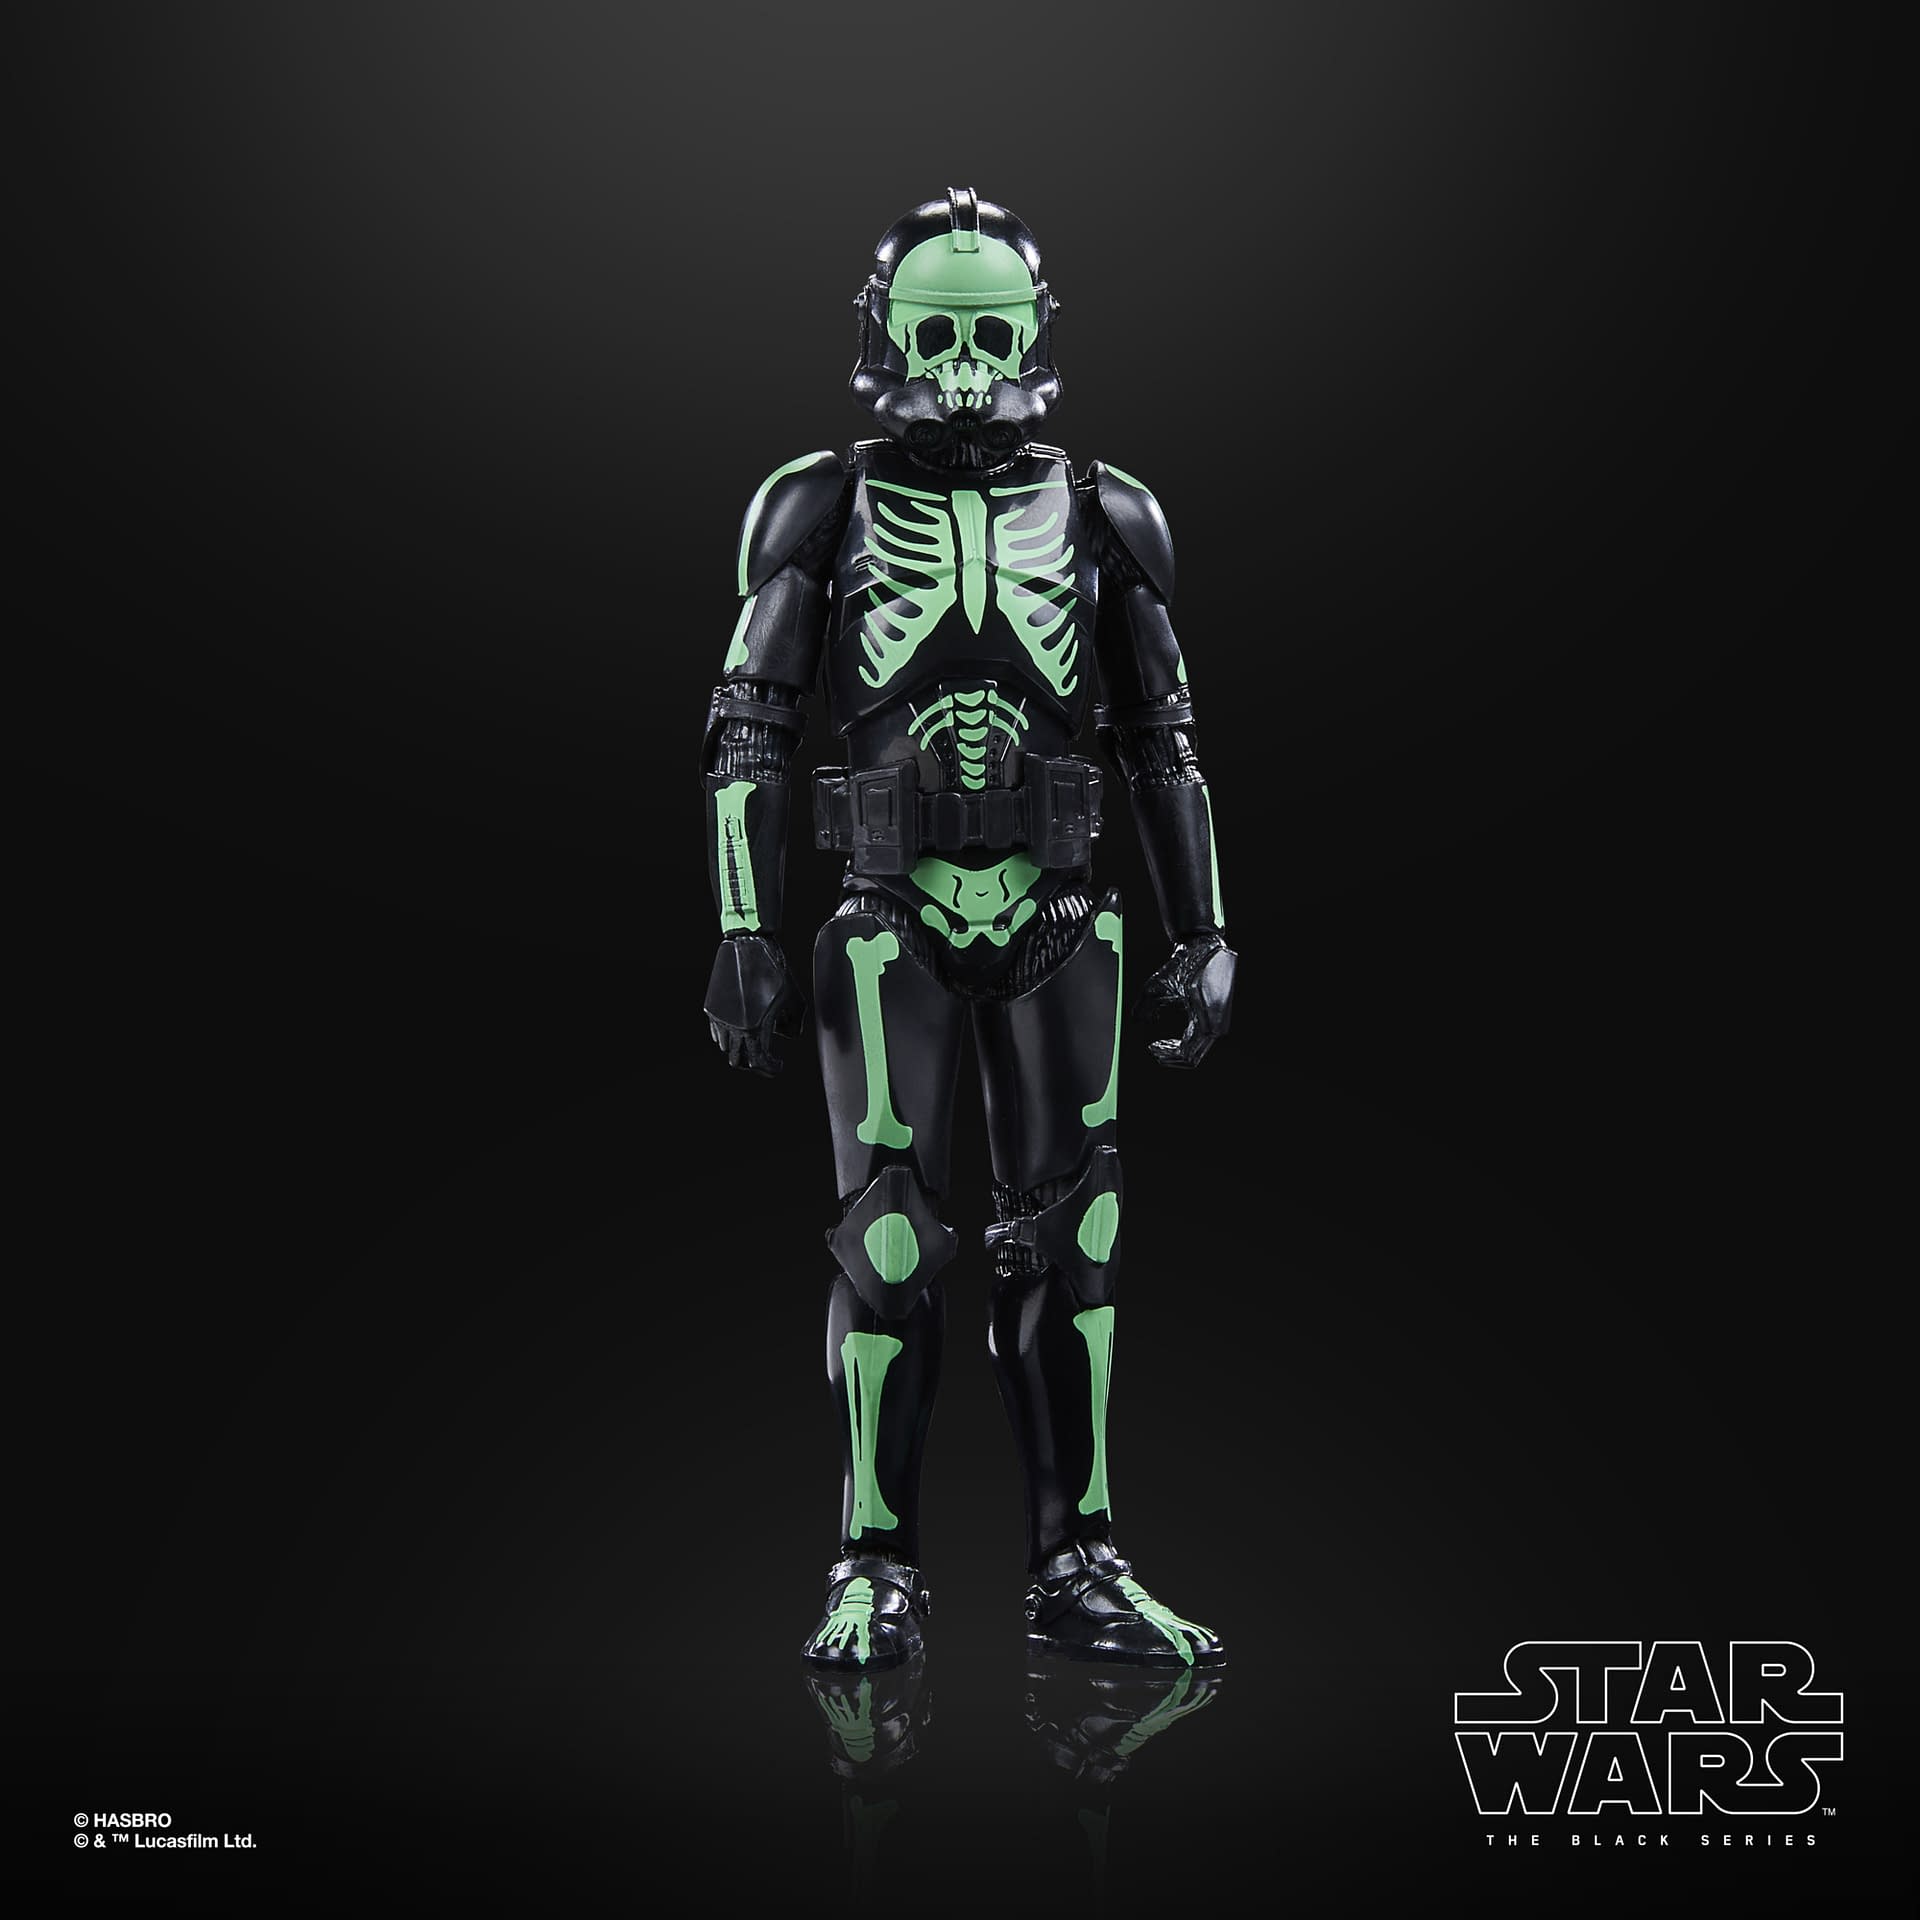 Hasbro Reveals Star Wars: The Black Series Halloween Edition Figures